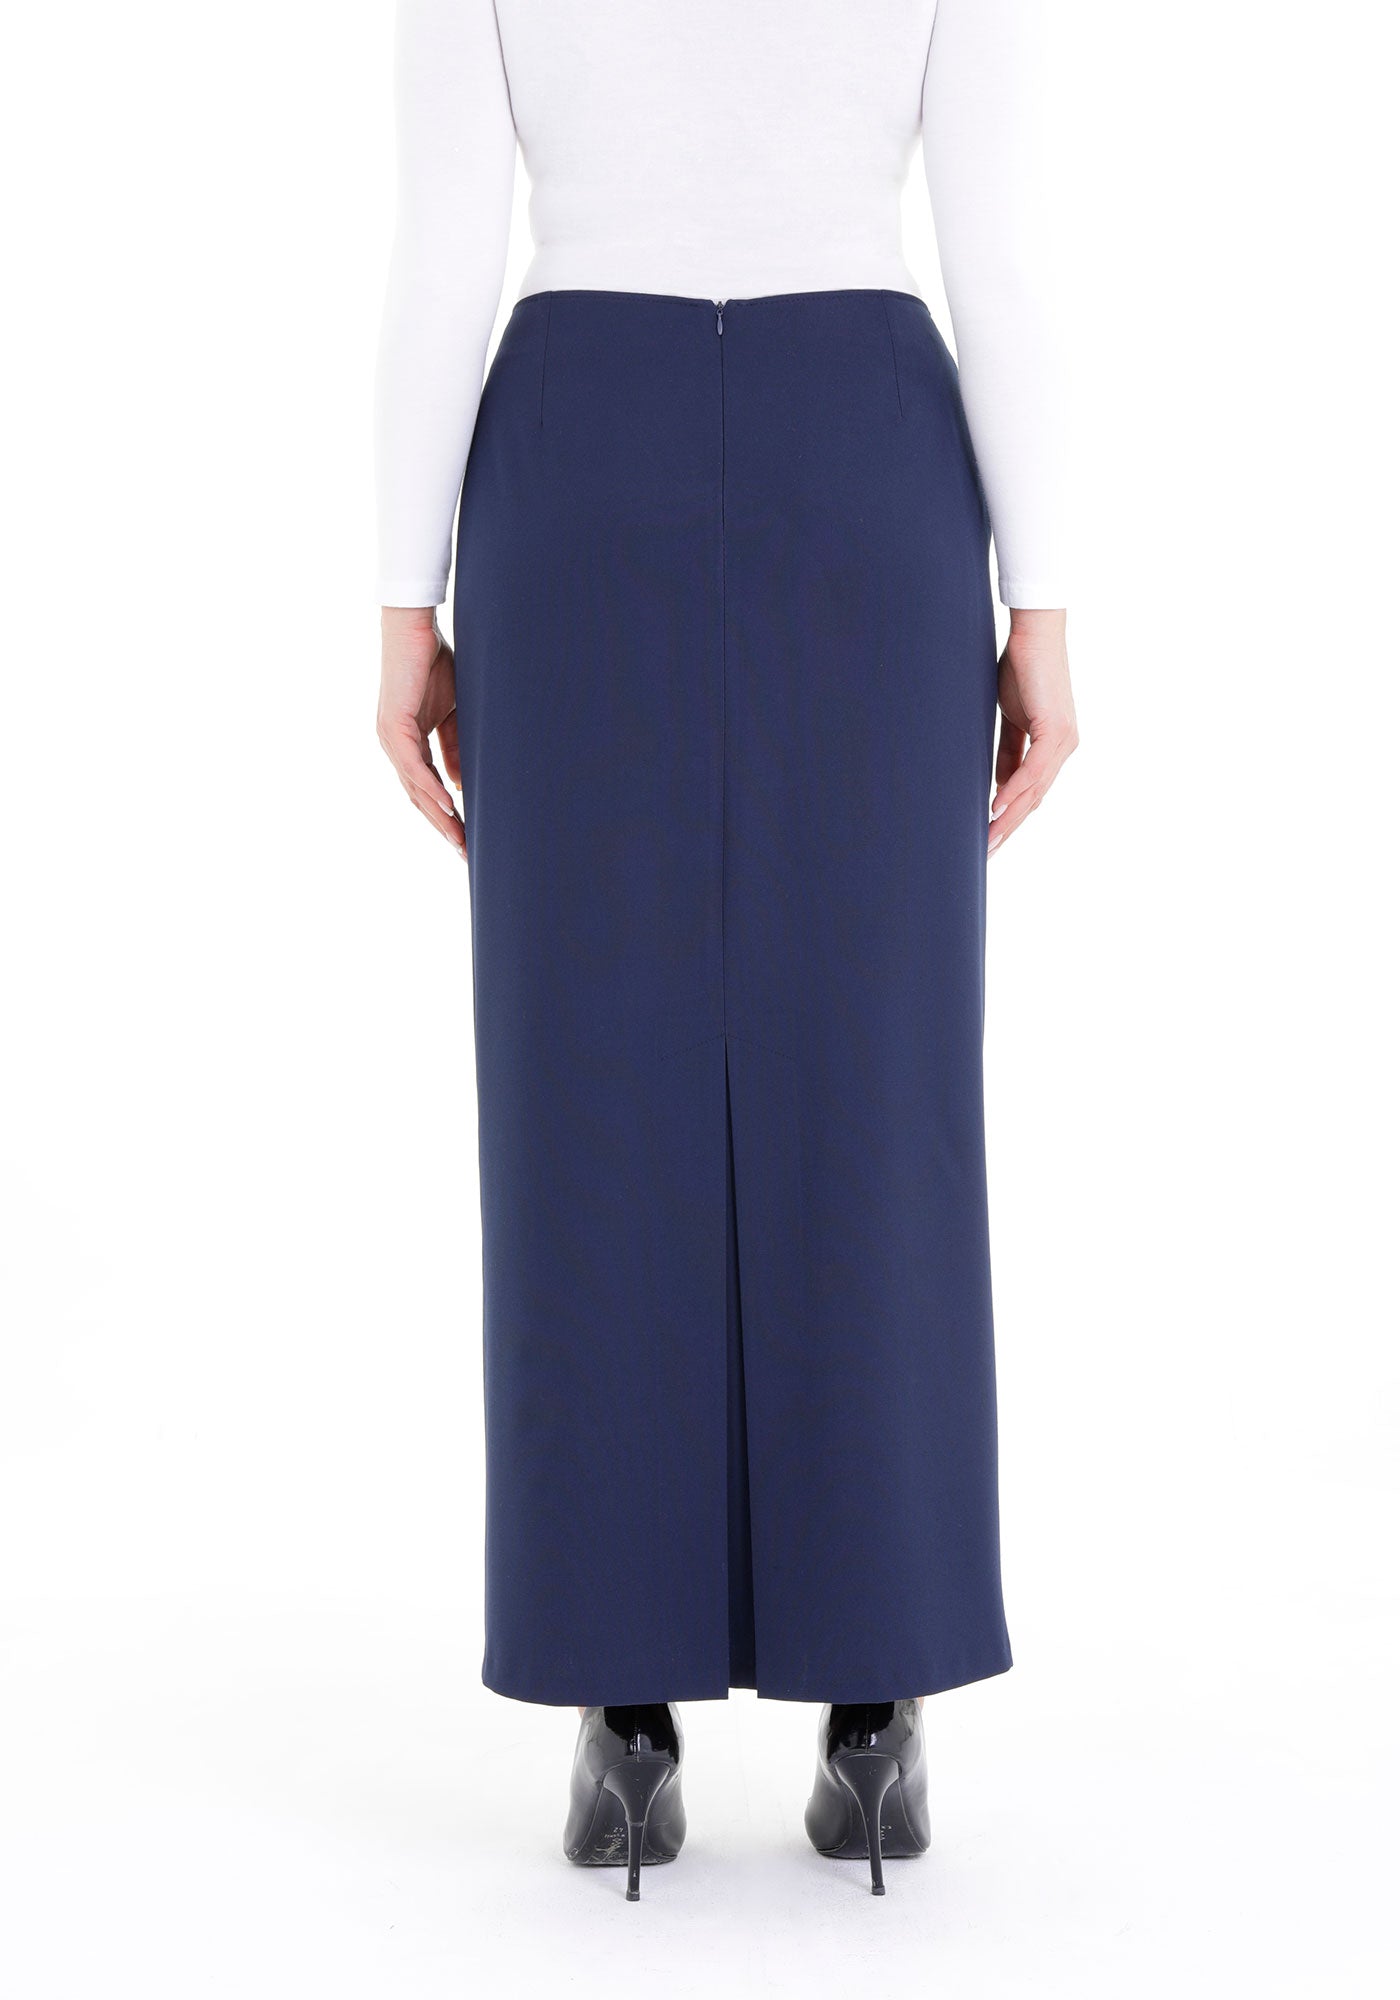 Women's Oversized Navy Blue Maxi Pencil Skirt G-Line